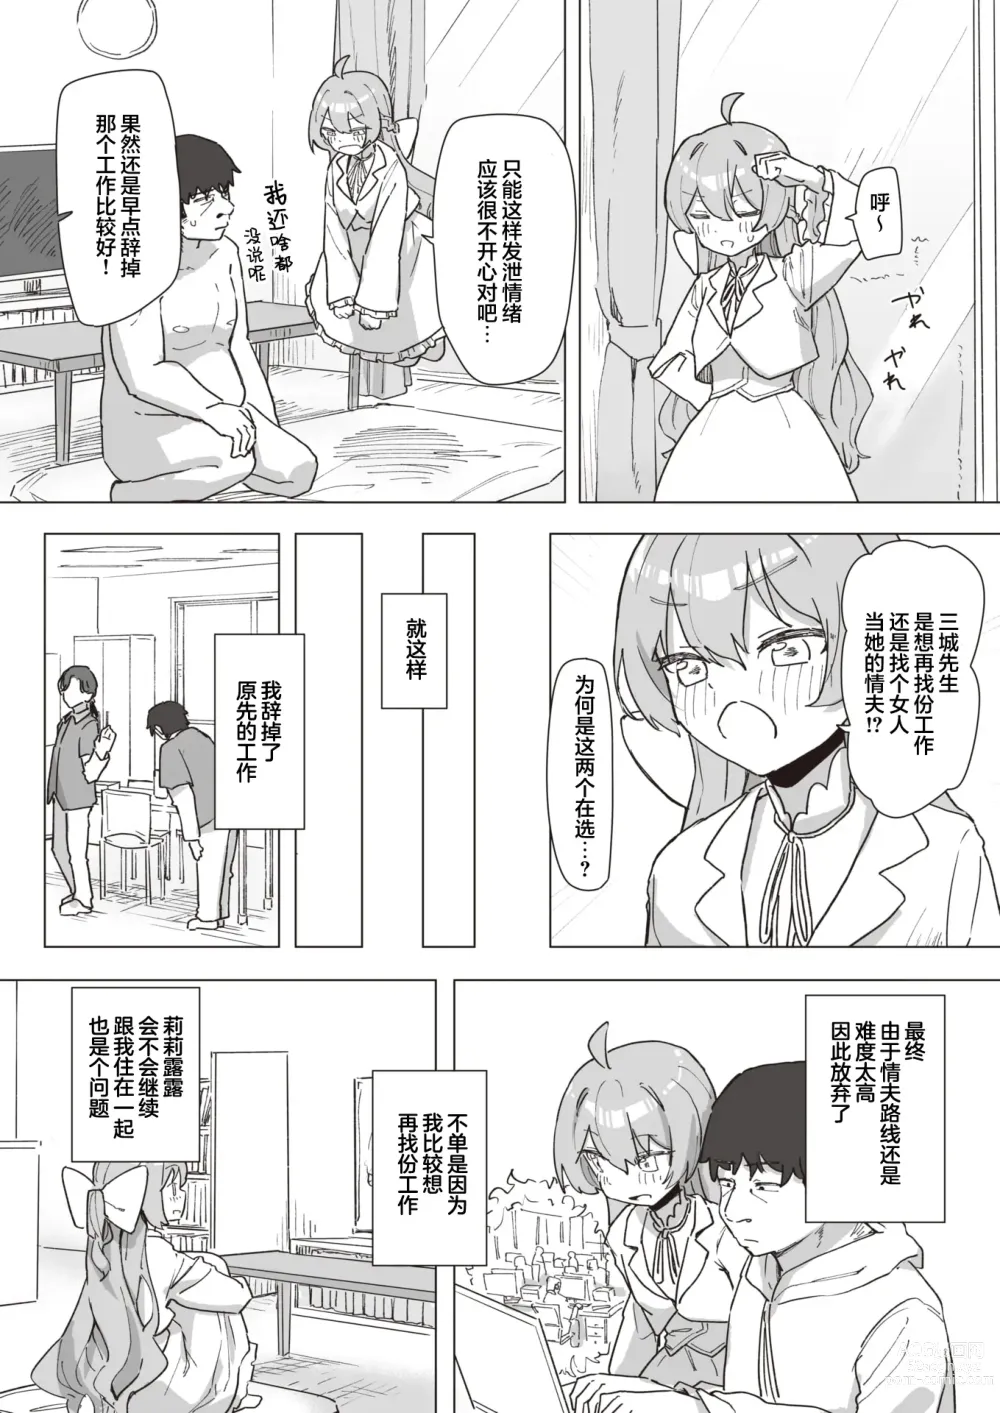 Page 10 of manga Mahou Shoujo no Ongaeshi Chuuhen - Magical Girls Giving Back